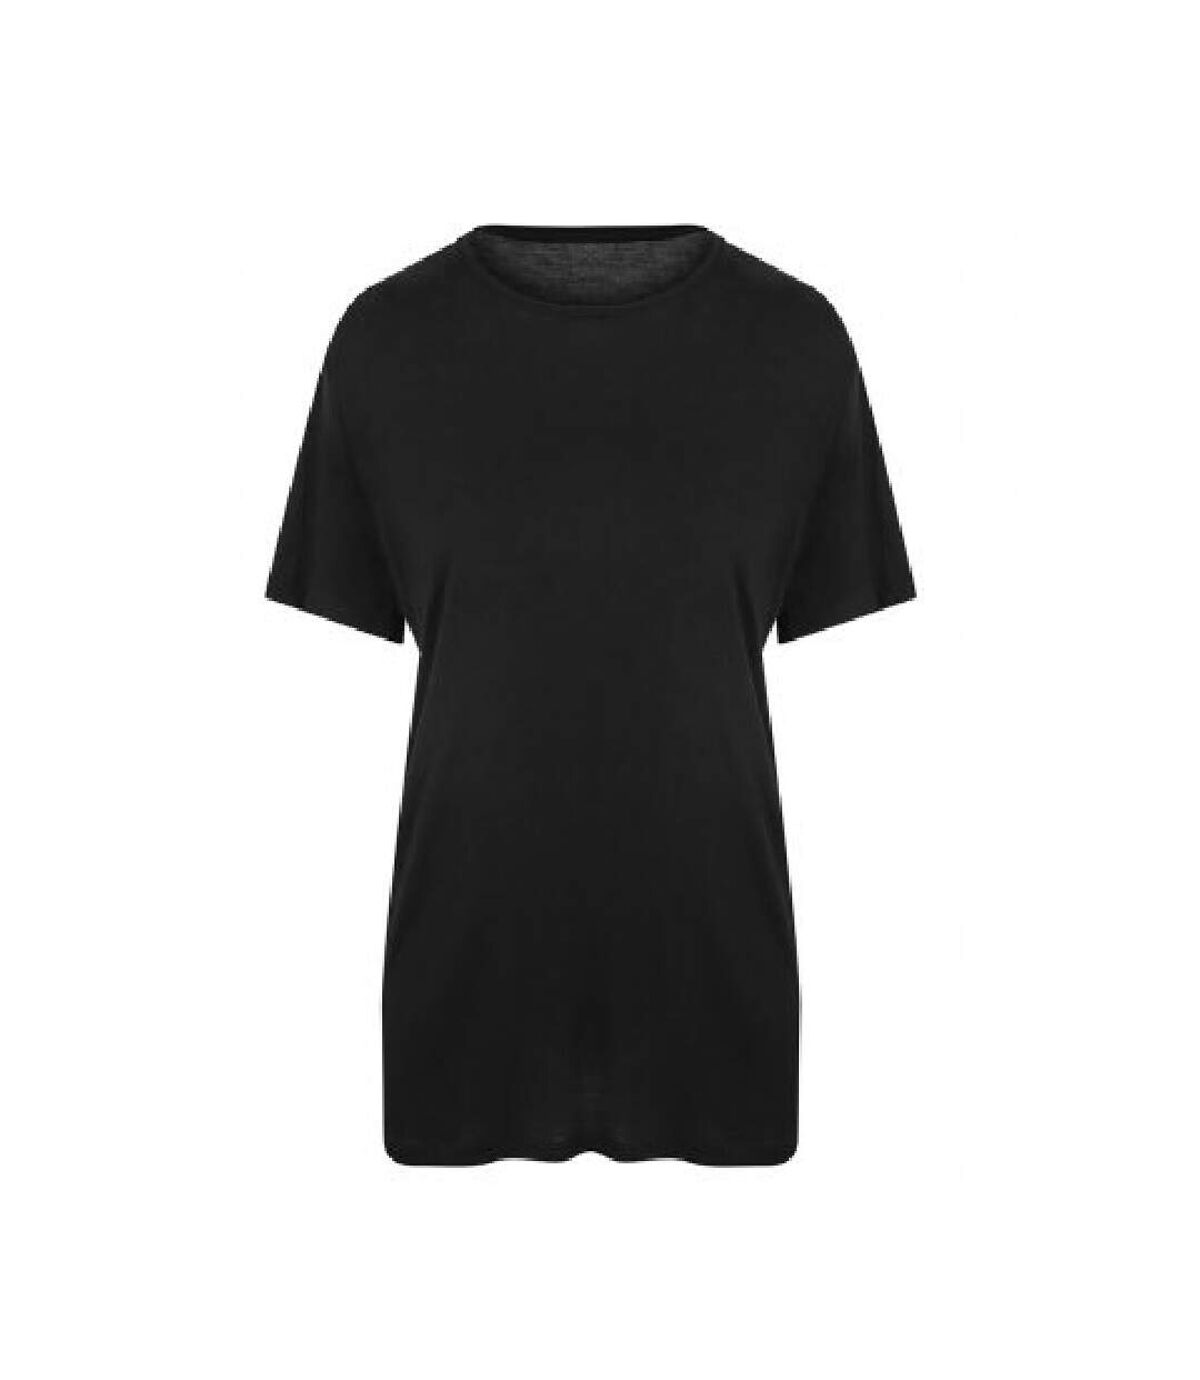 Ecologie - T-shirt Daintre - Homme (Noir) - UTPC4090